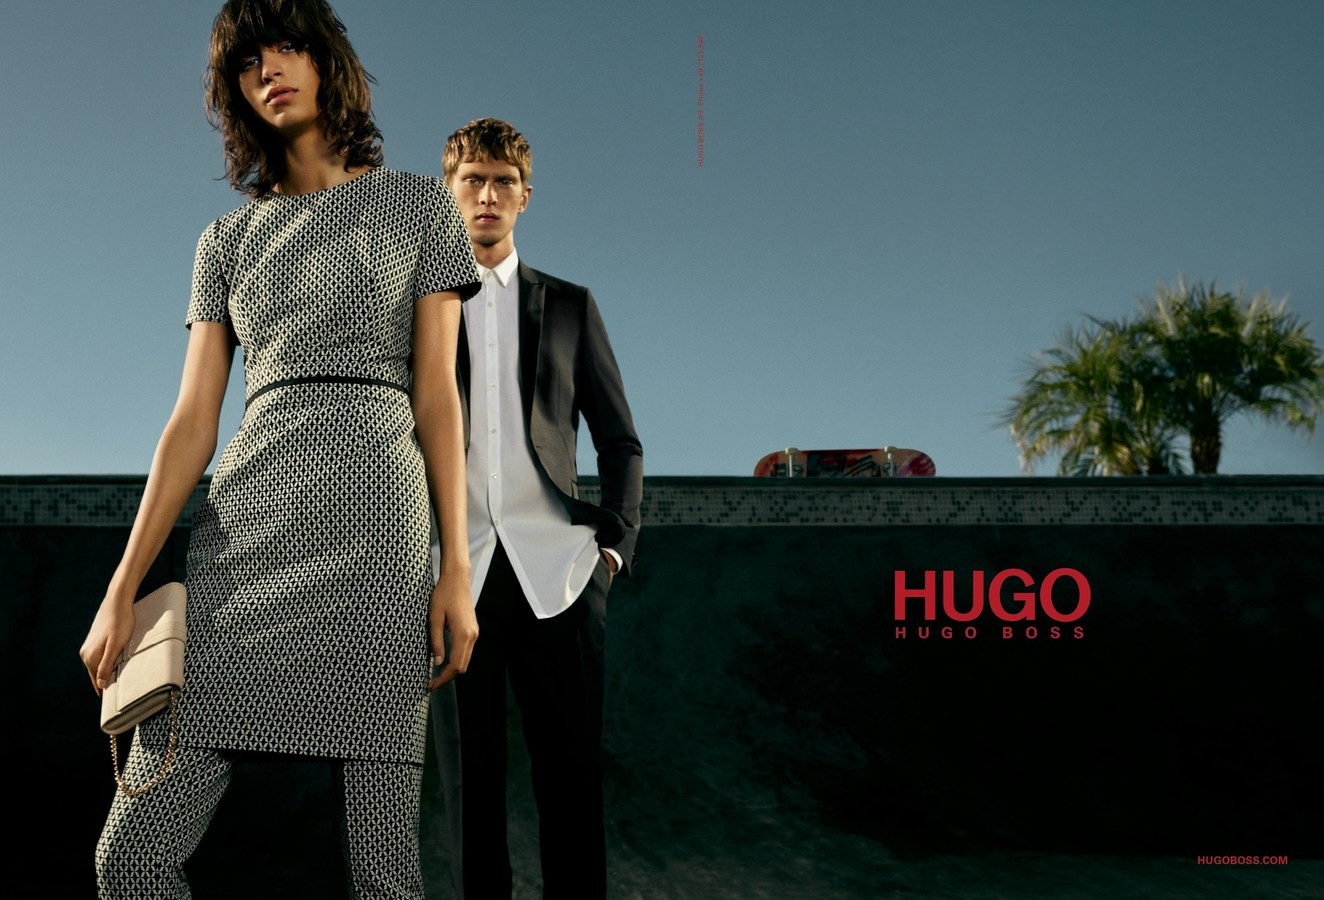 Hugo com. Хьюго босс. Hugo Boss 6 campaign. Hugo Boss campaign. Hugo – Hugo Boss 1997.